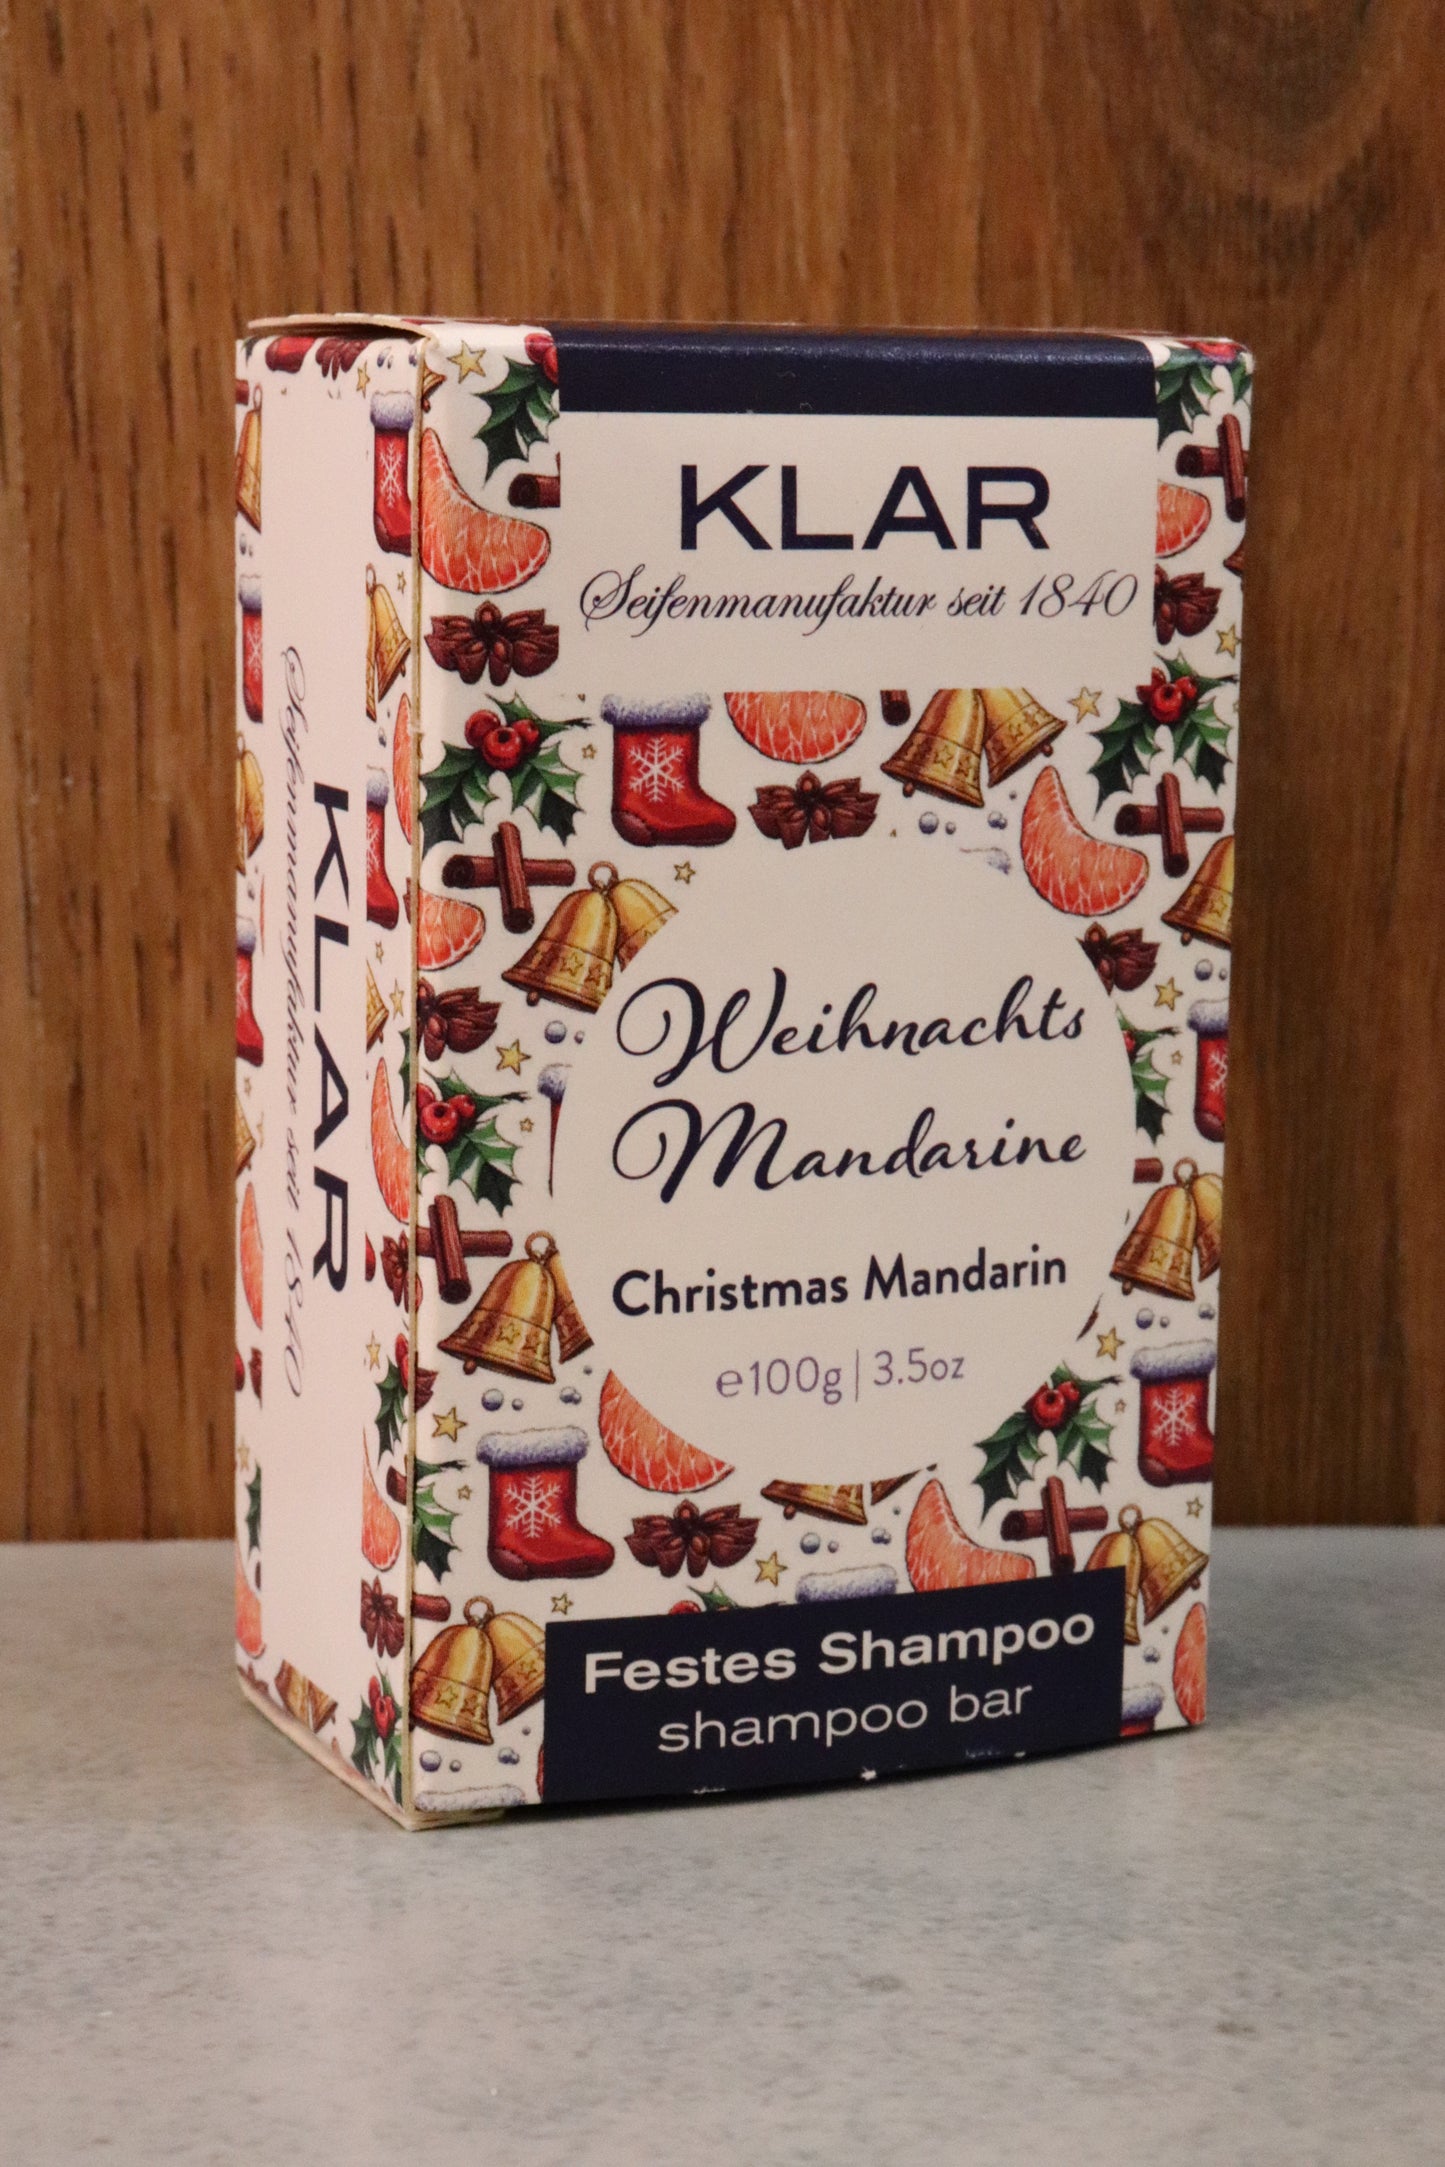 Festes Shampoo Weihnachts-Mandarine 100g, Klar